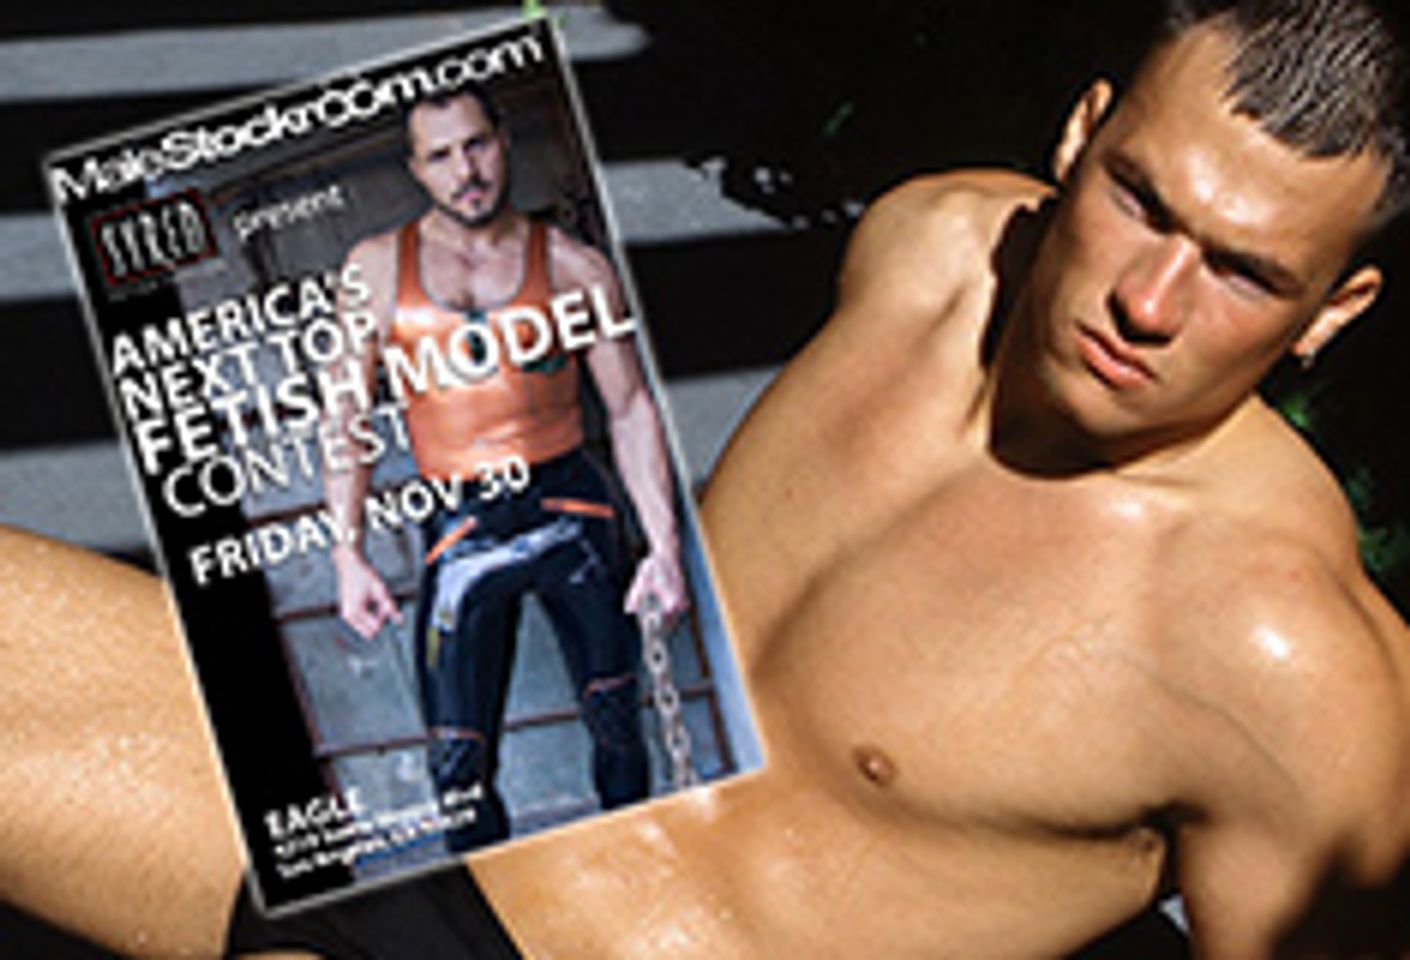 Jason Hawke Joins Stockroom Model Contest